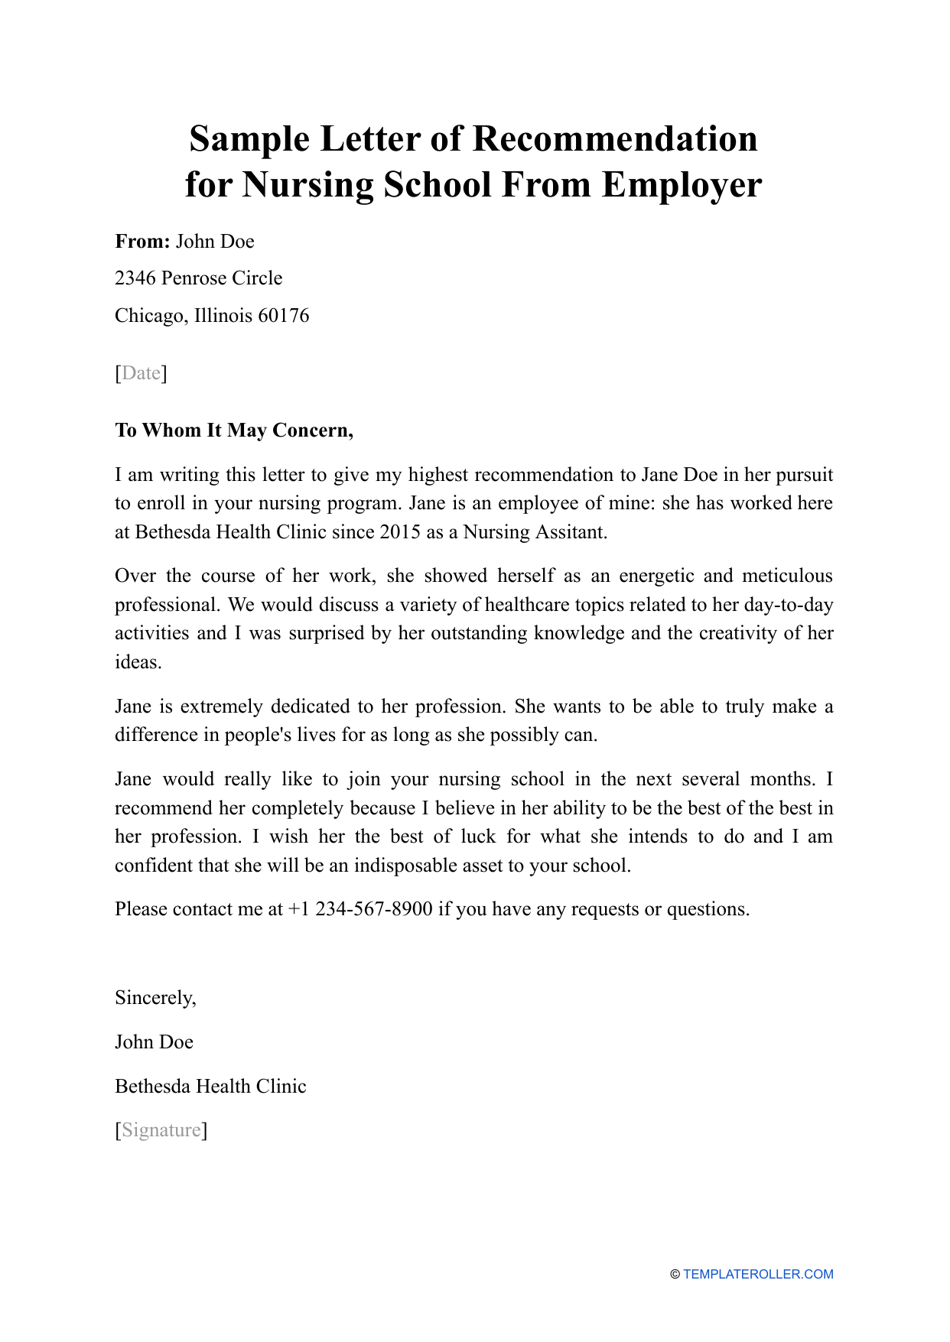 Sample Letter of Recommendation for Nursing School From Employer